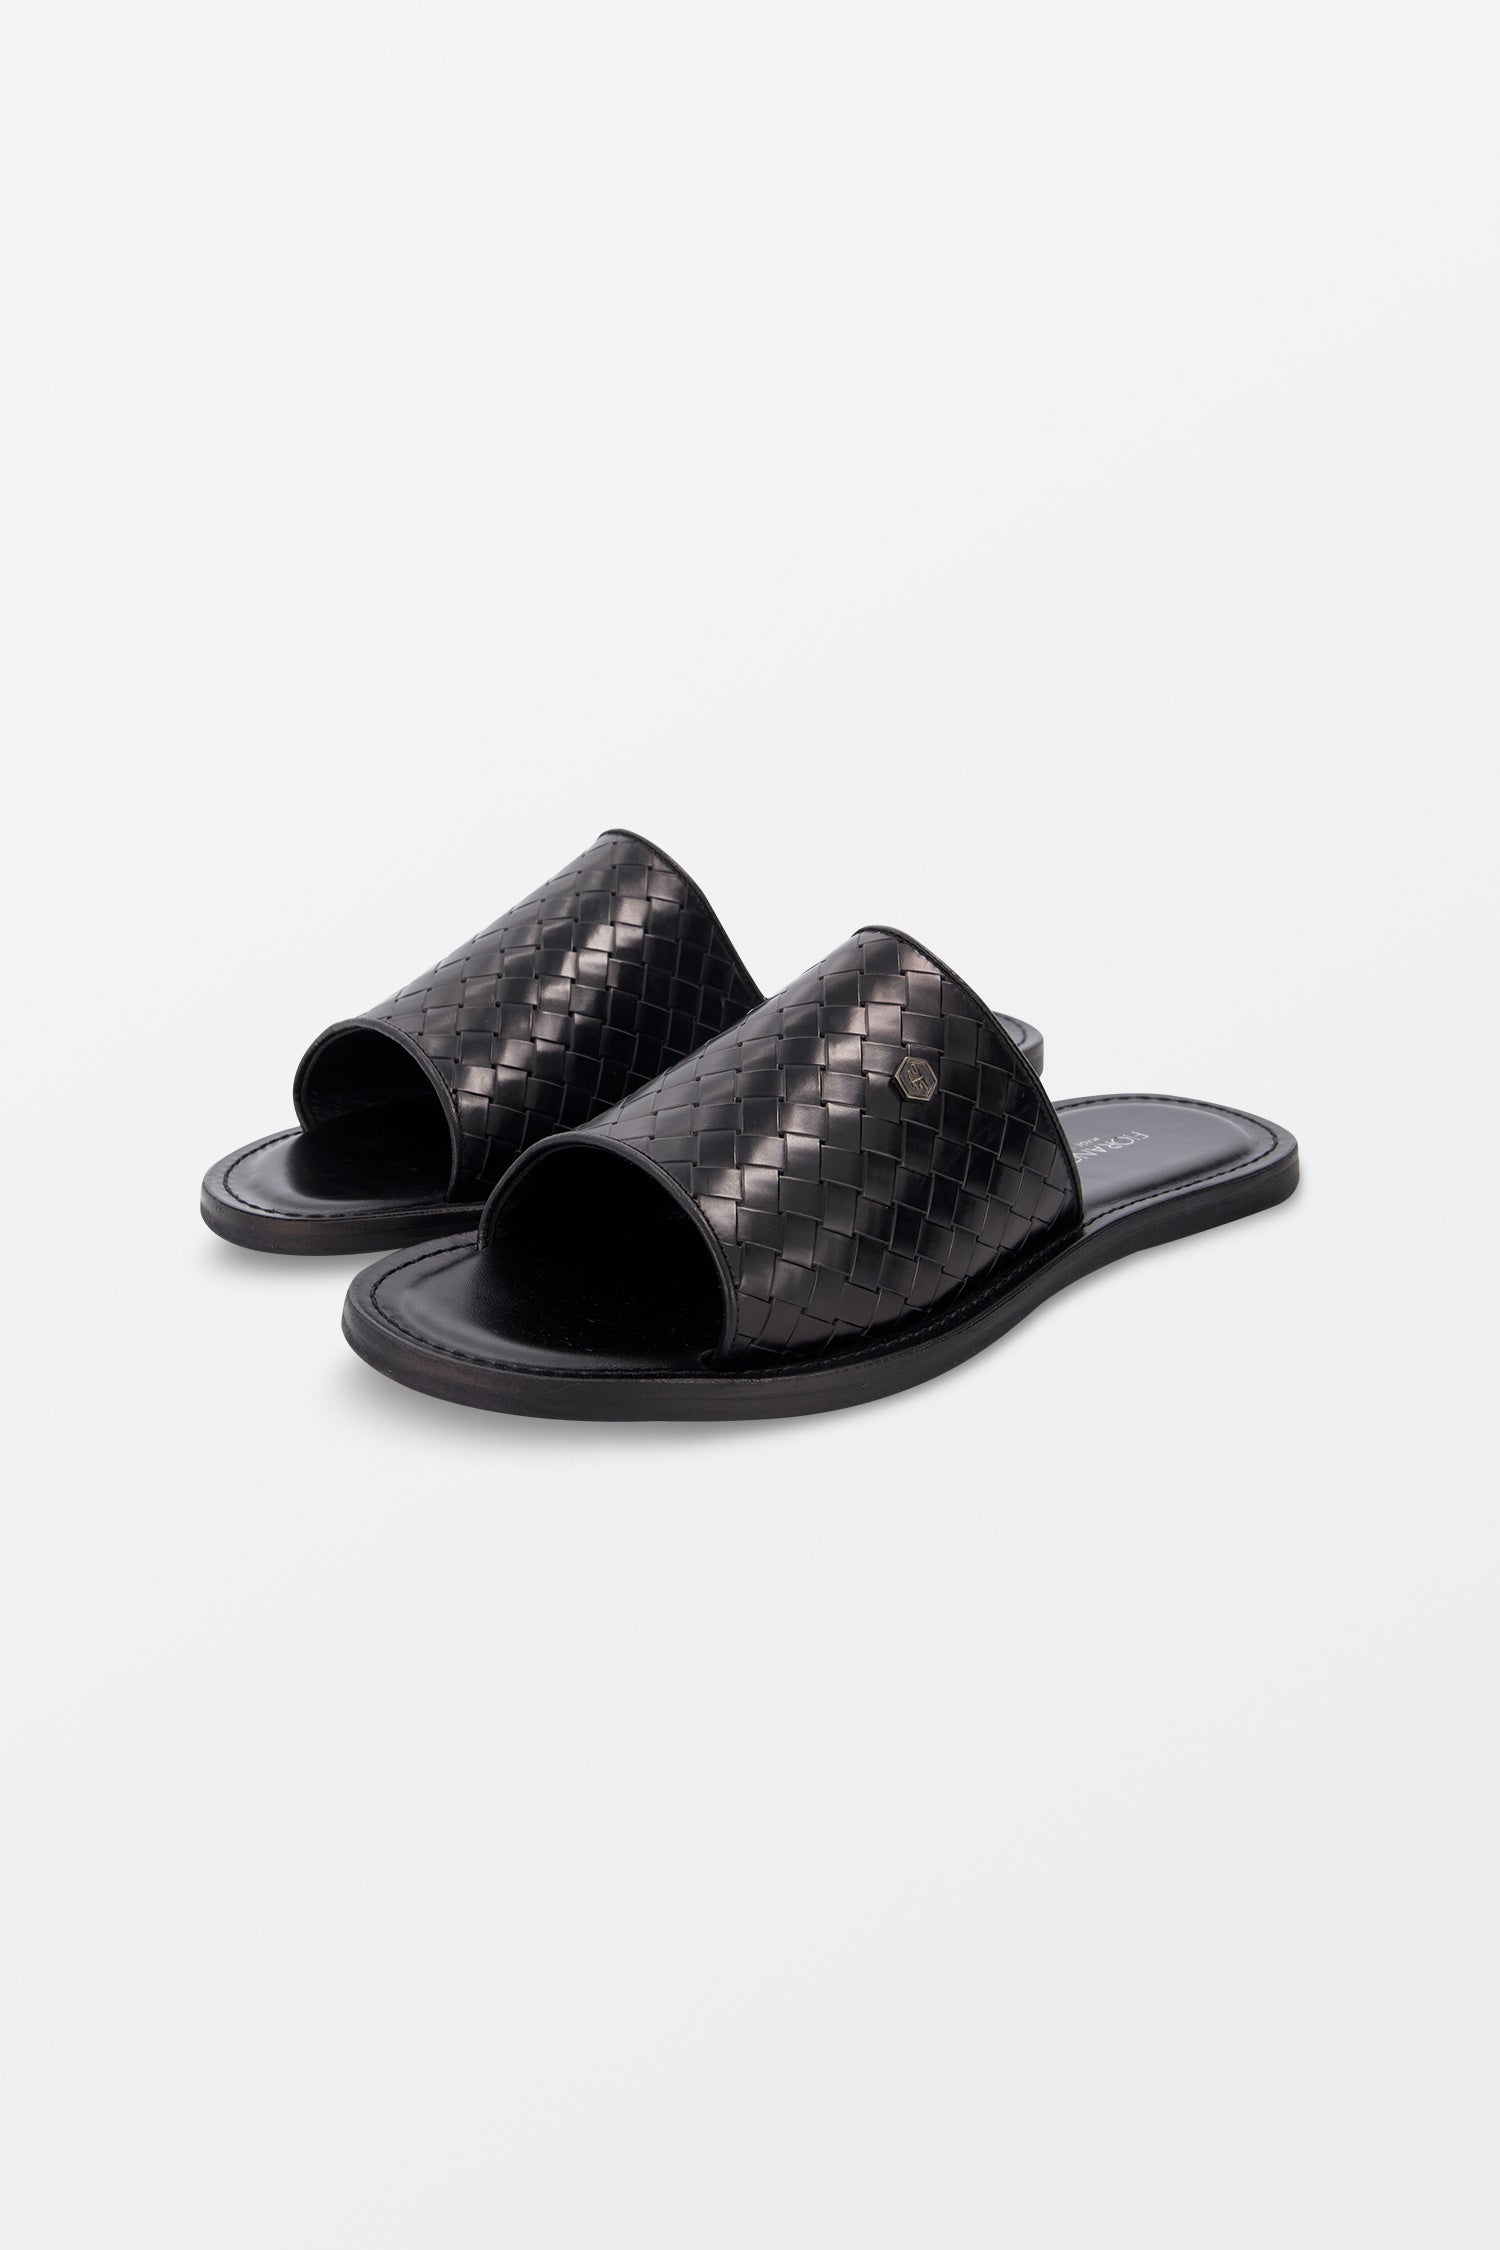 Fiorangelo Black Leather Slides